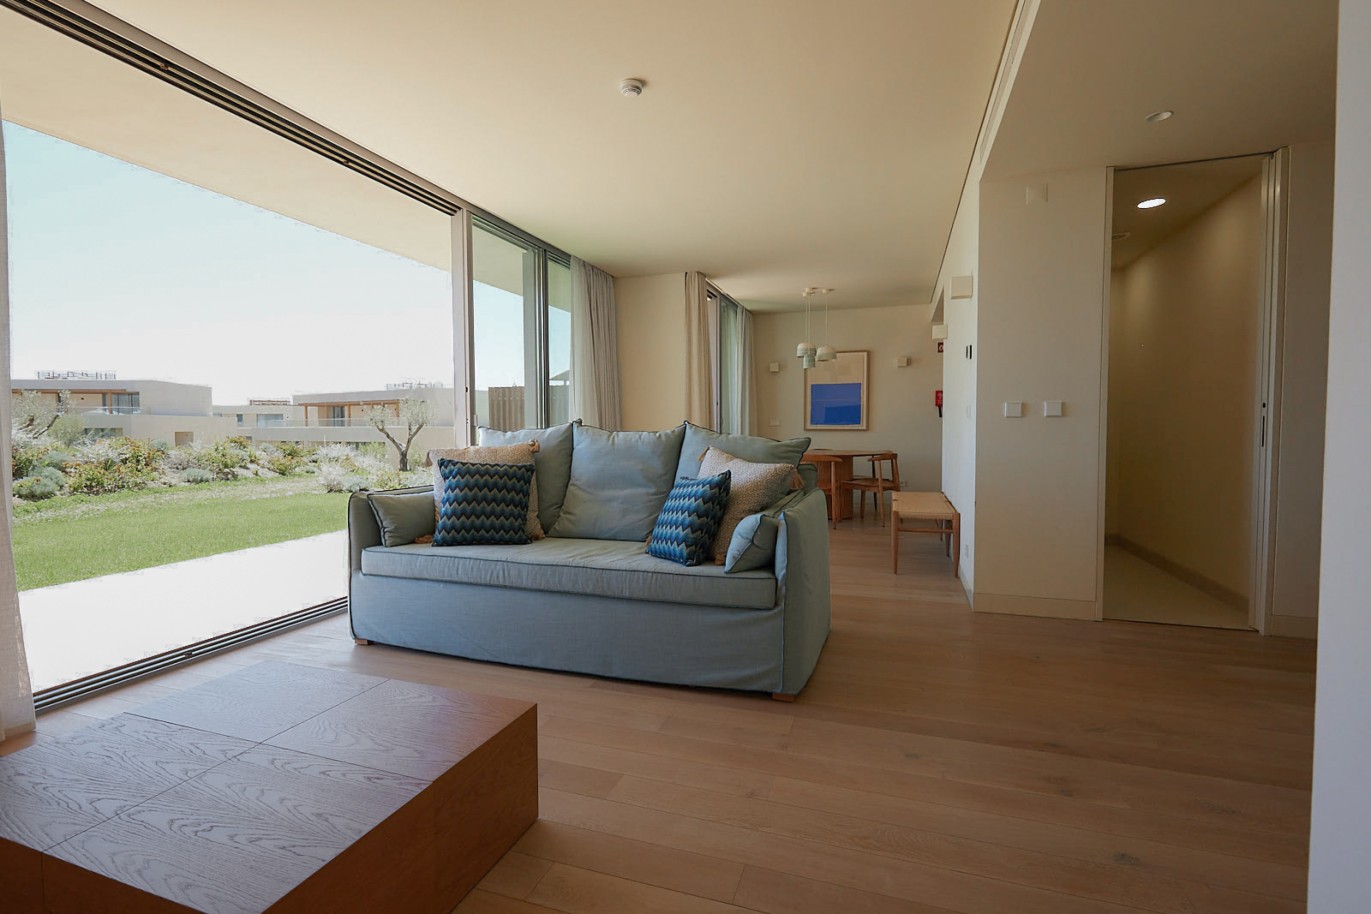 2 bedroom apartment in resort, for sale in Porches, Algarve_228947